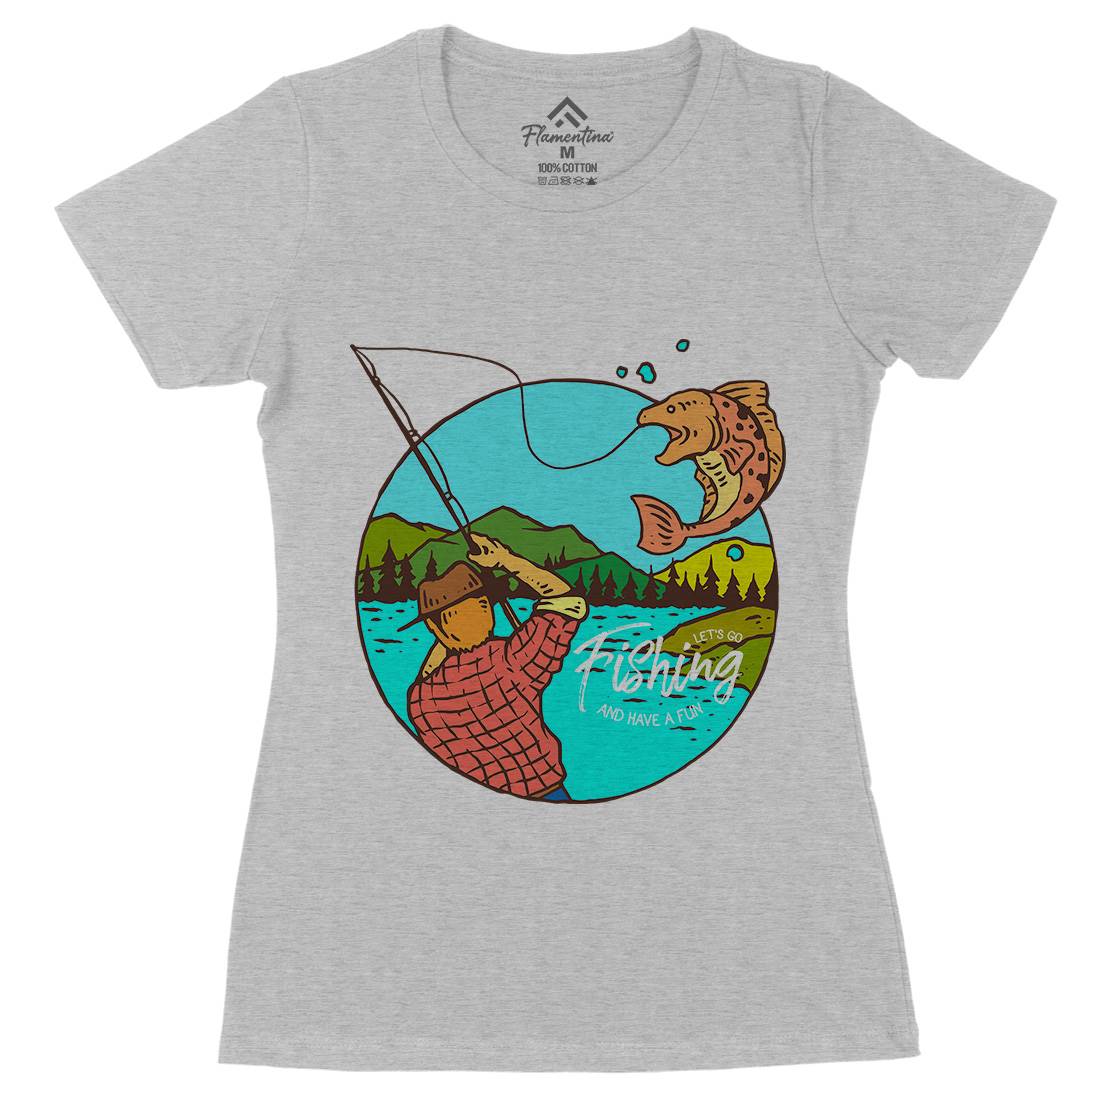 Lets Go Womens Organic Crew Neck T-Shirt Fishing C728